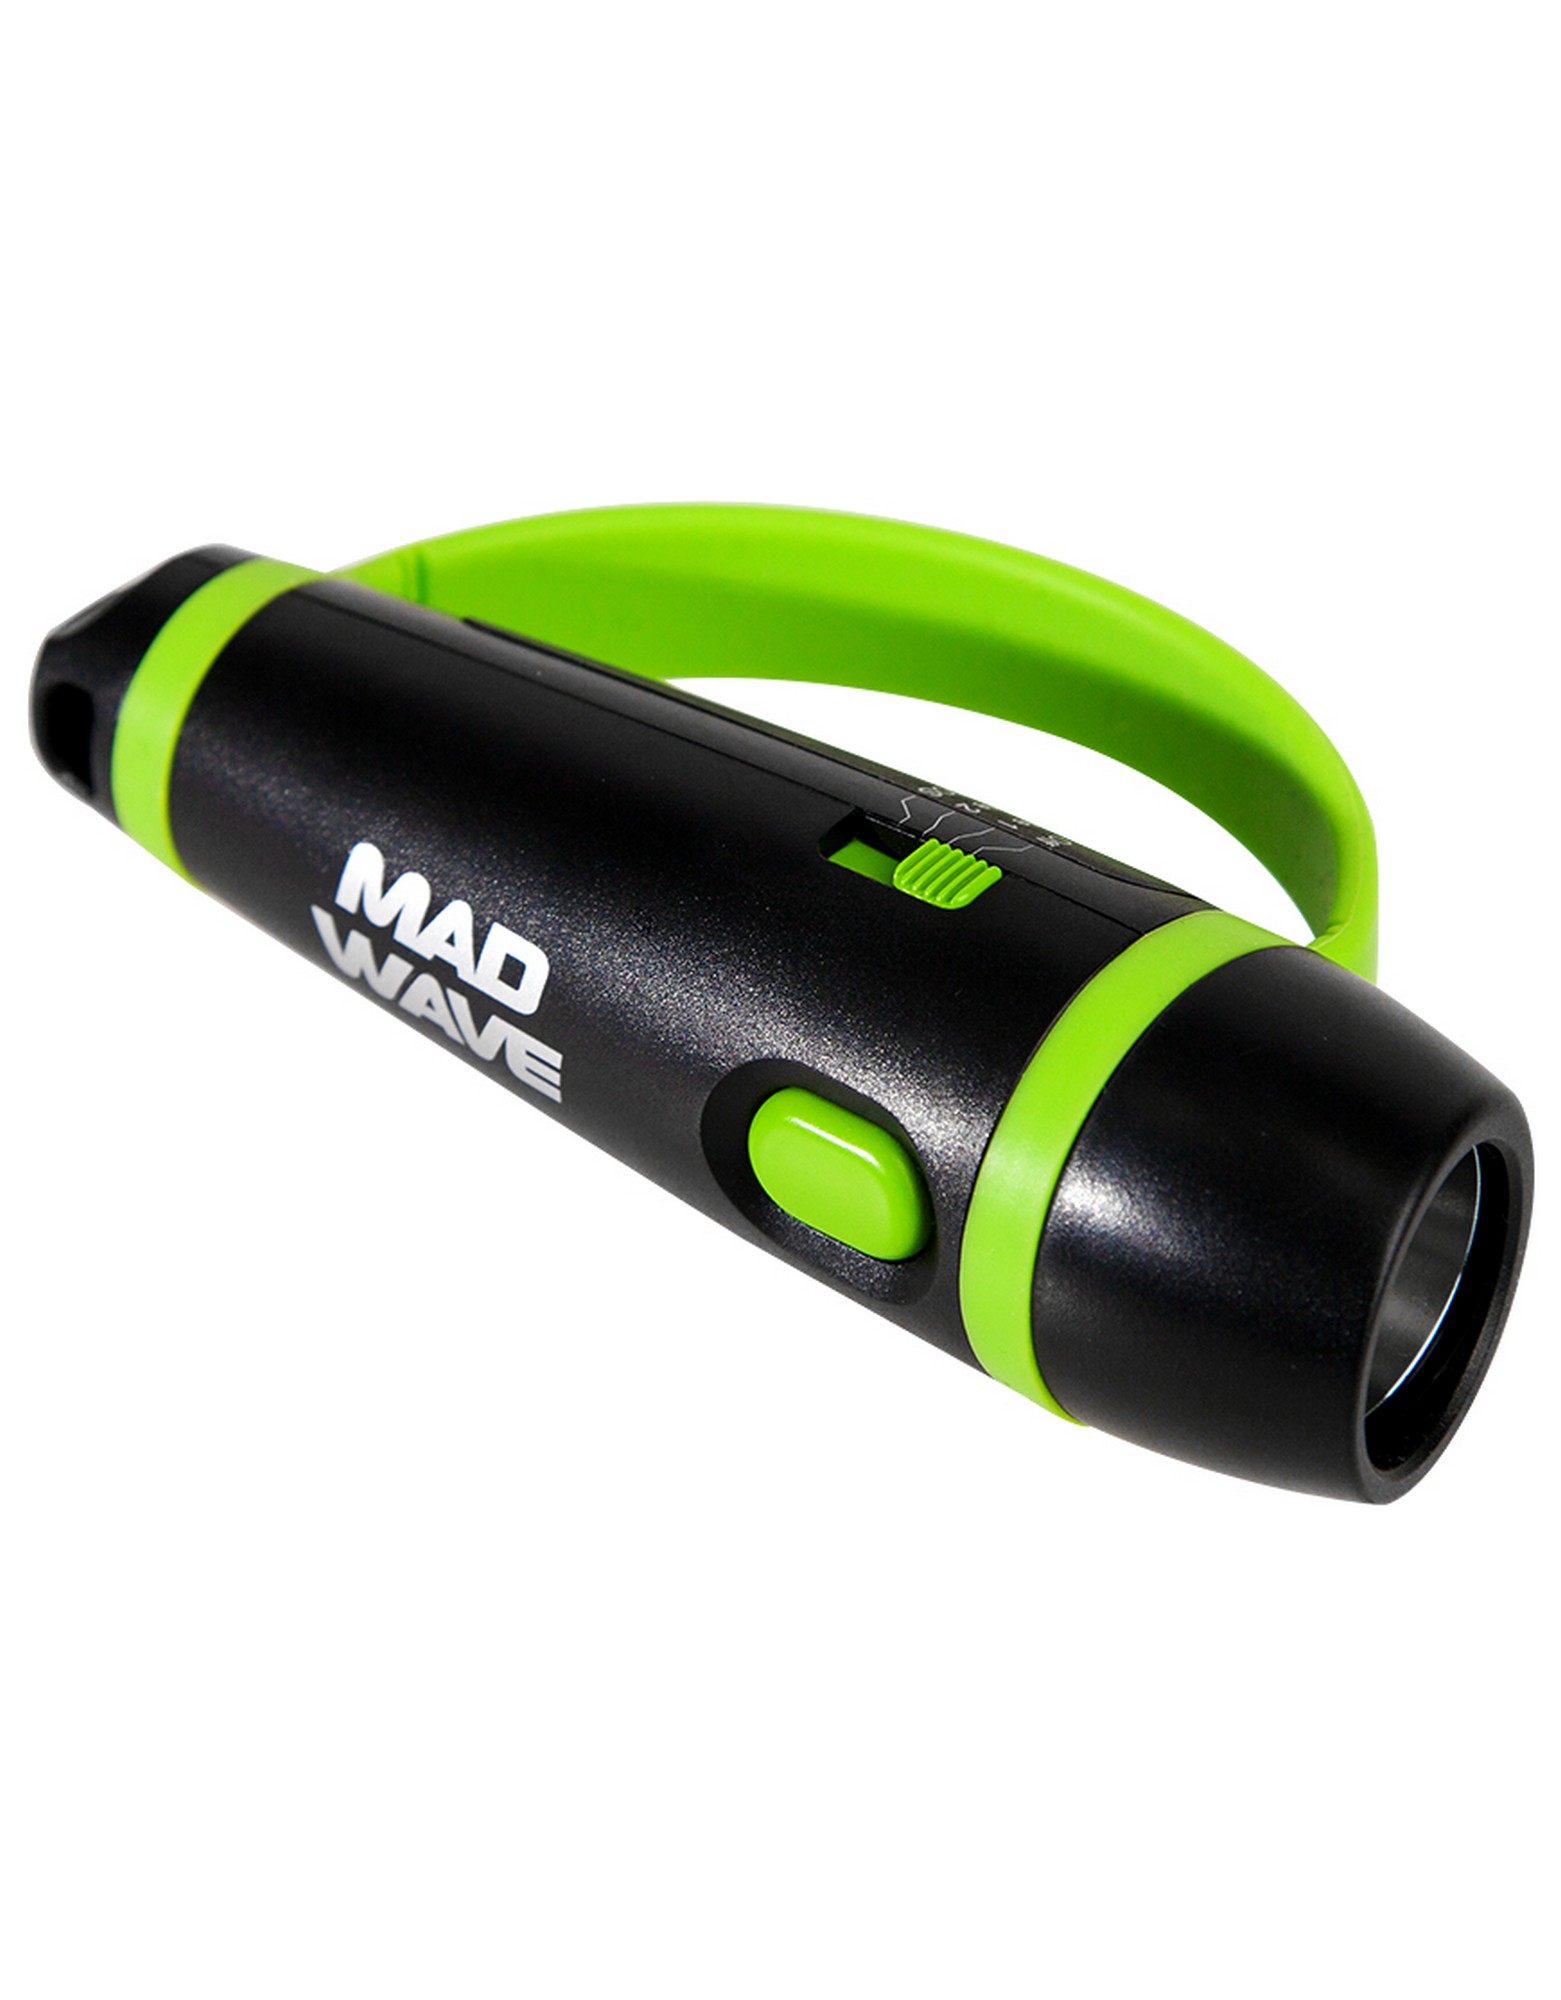   Mad Wave E-Whistle M1707 01 0 01W